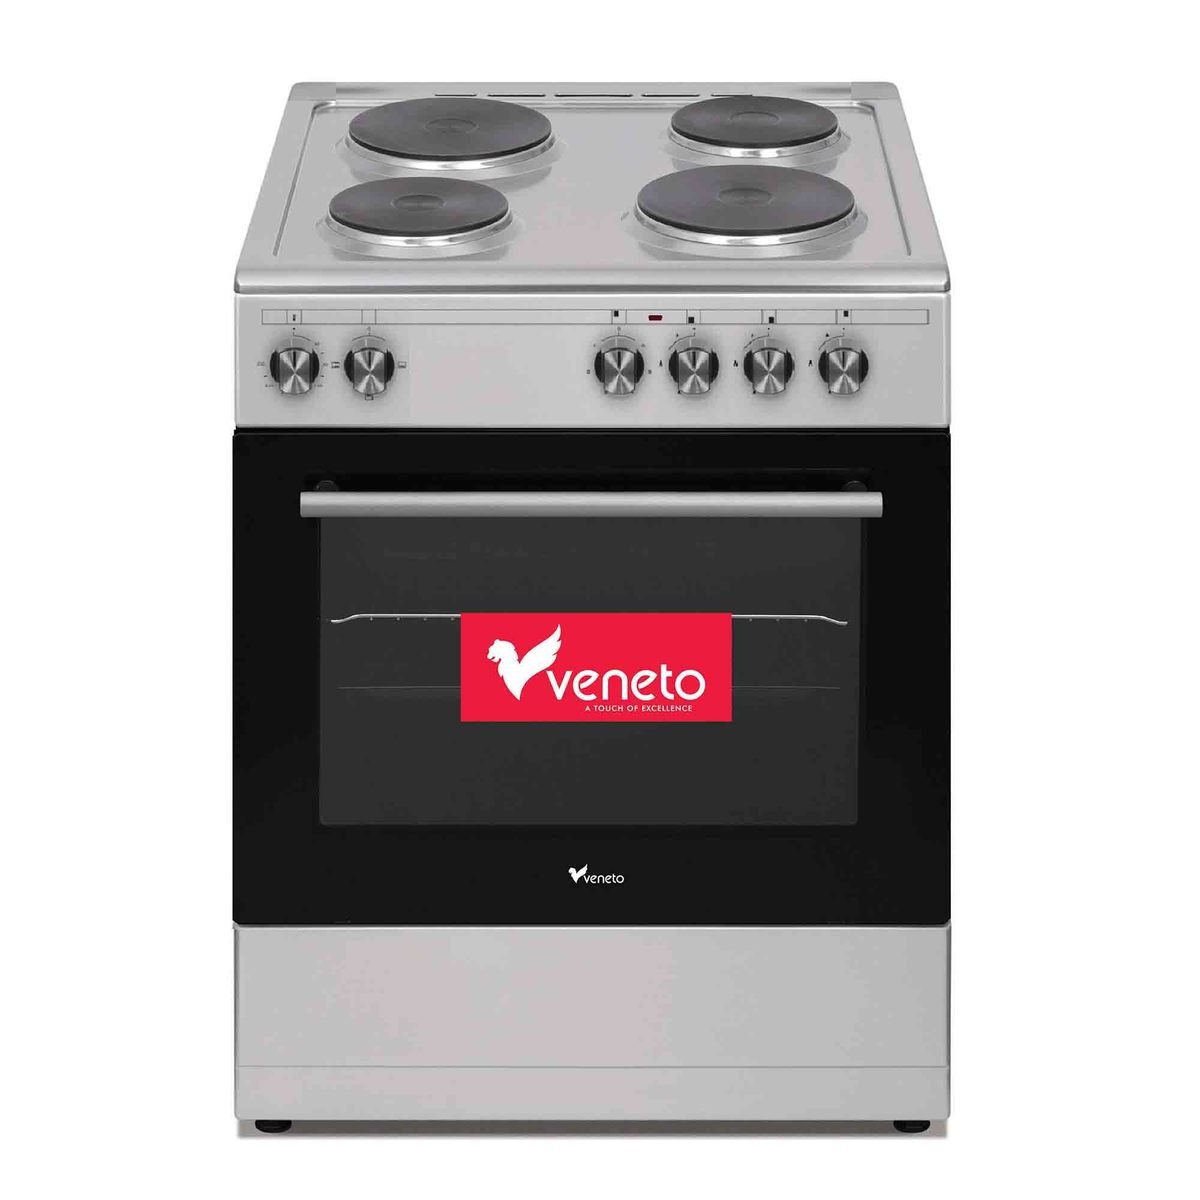 Veneto Hot Plate Cooking Range L660SX.VN 60x55 4Hot Plates